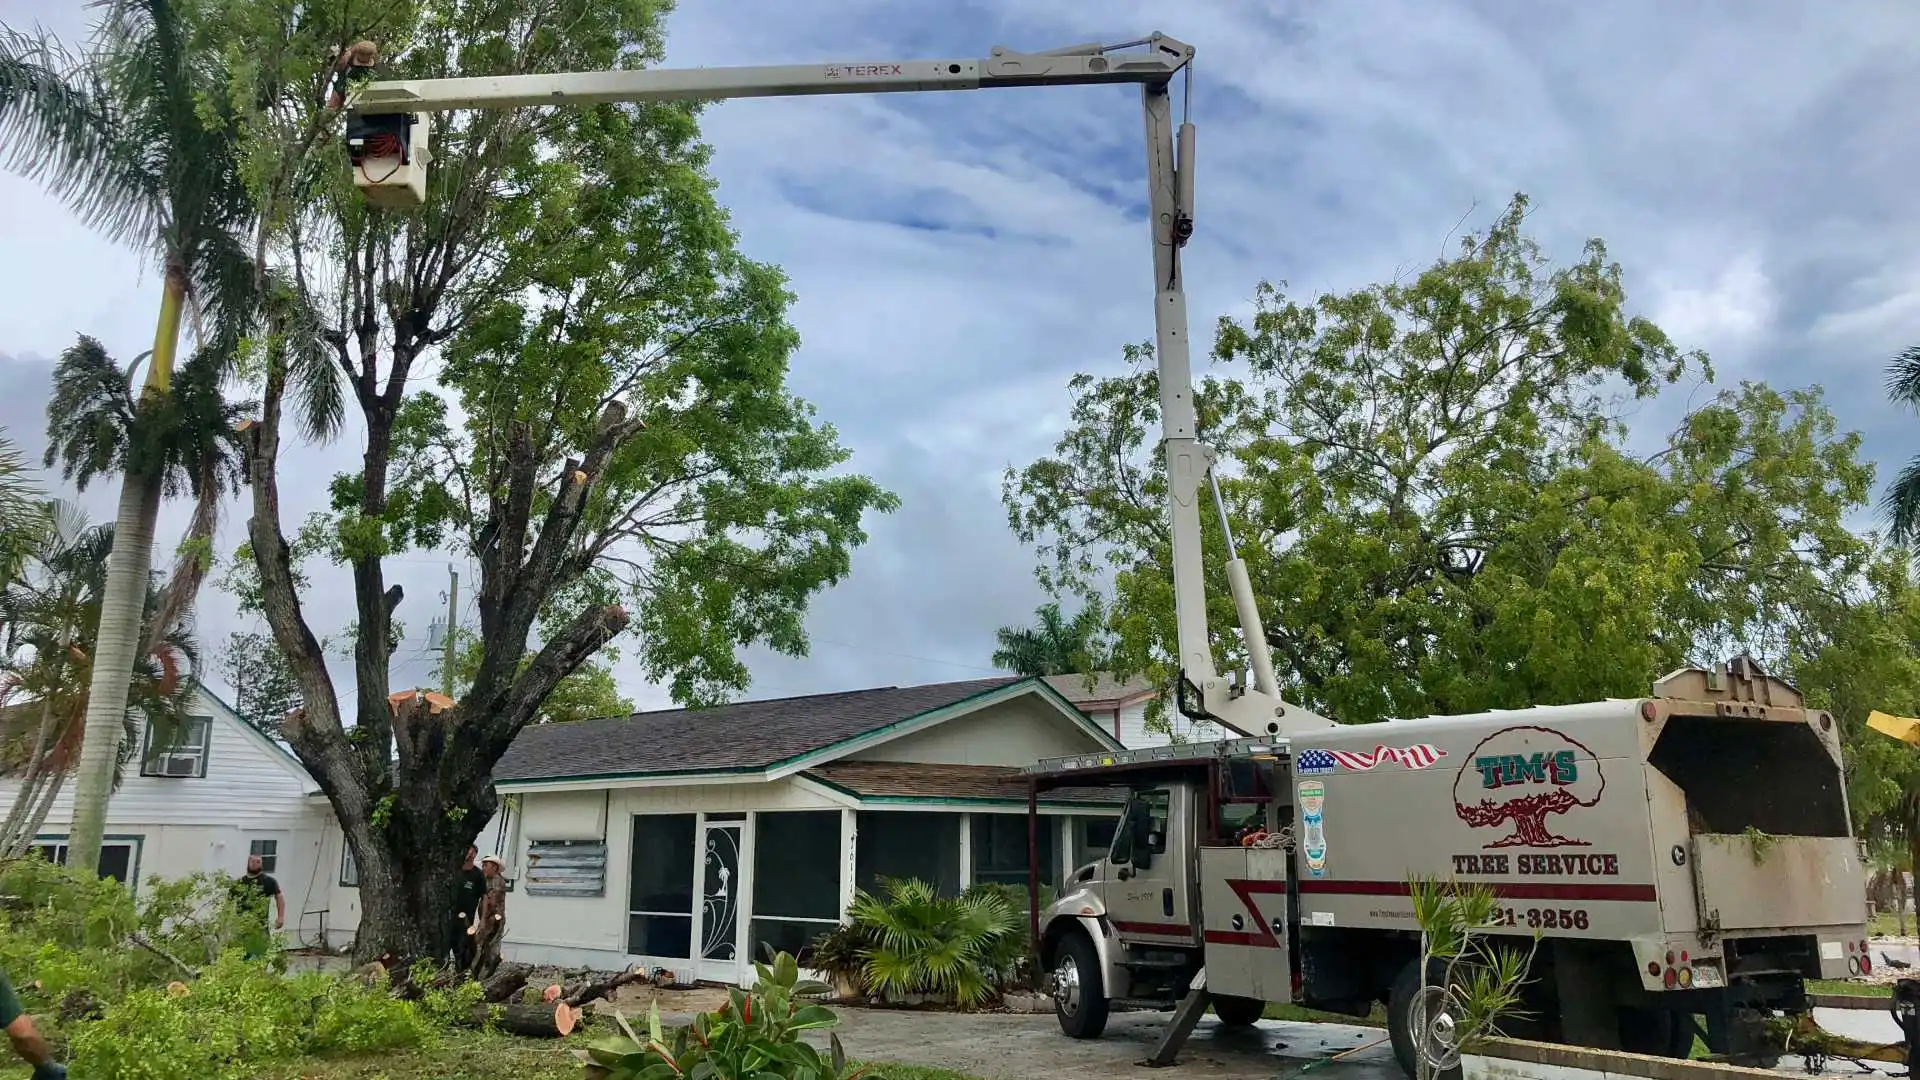 Professionals trimming a tree in Villas, FL.